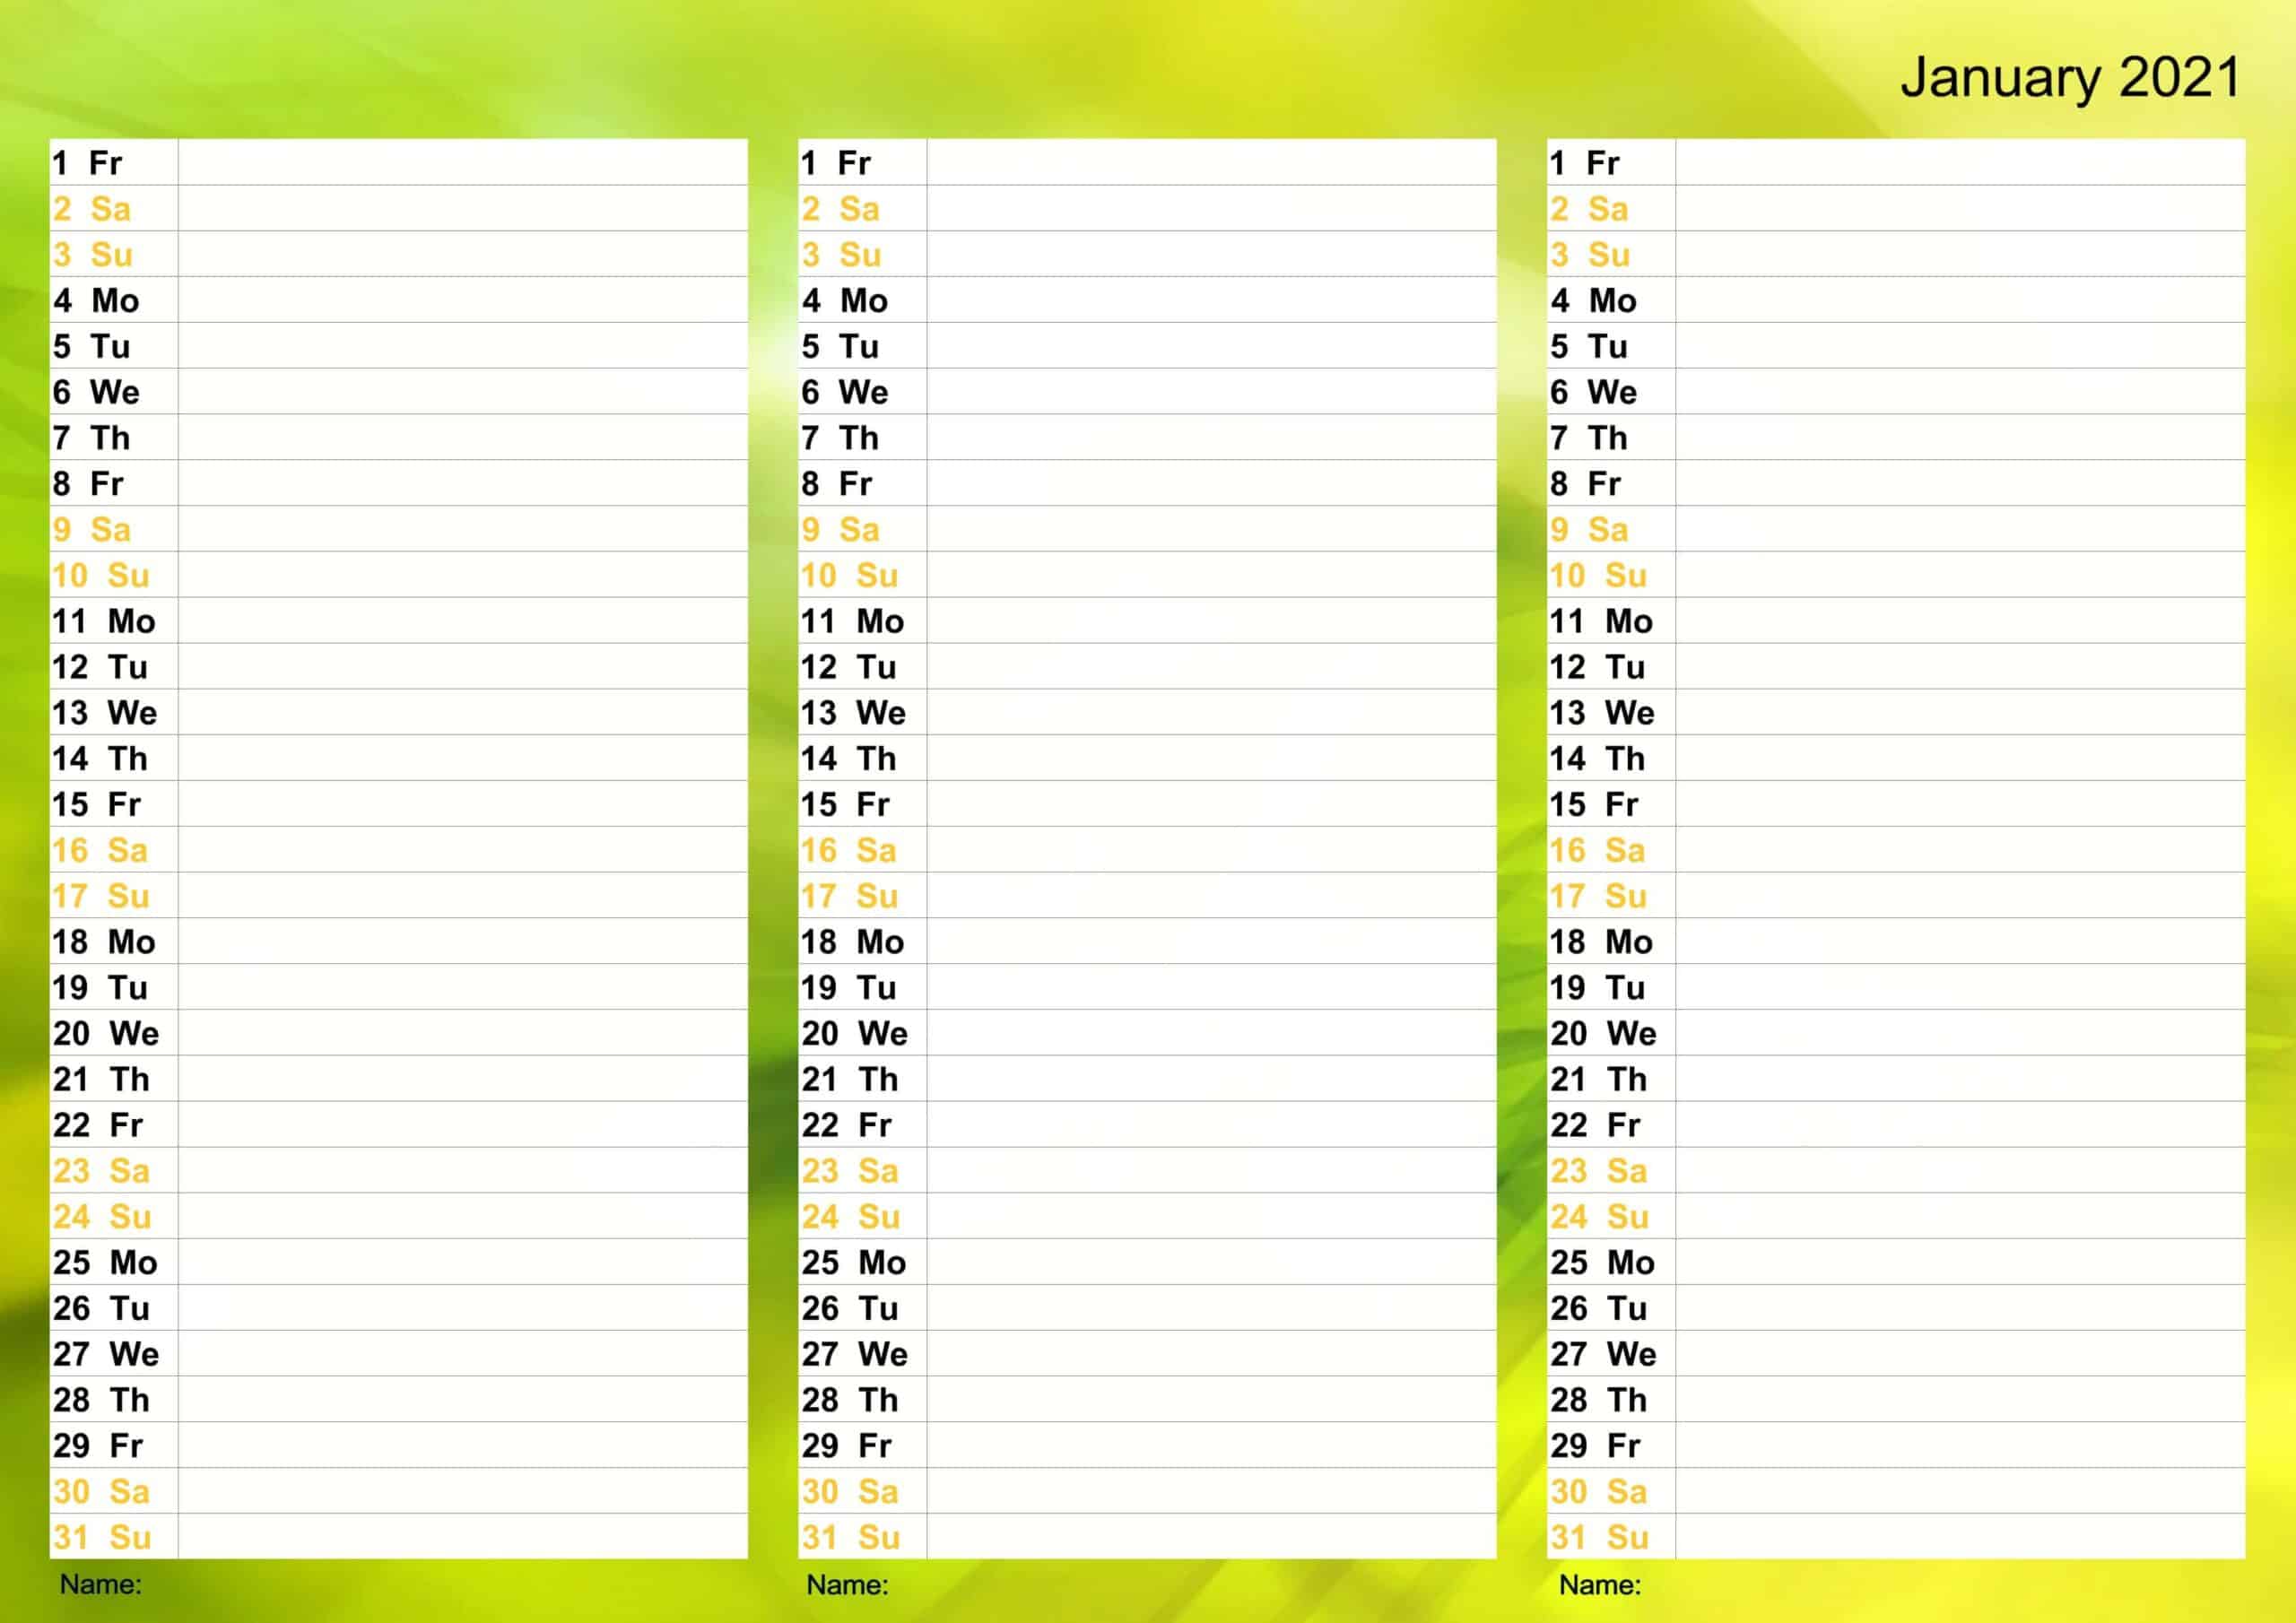 January 2021 Excel Calendar